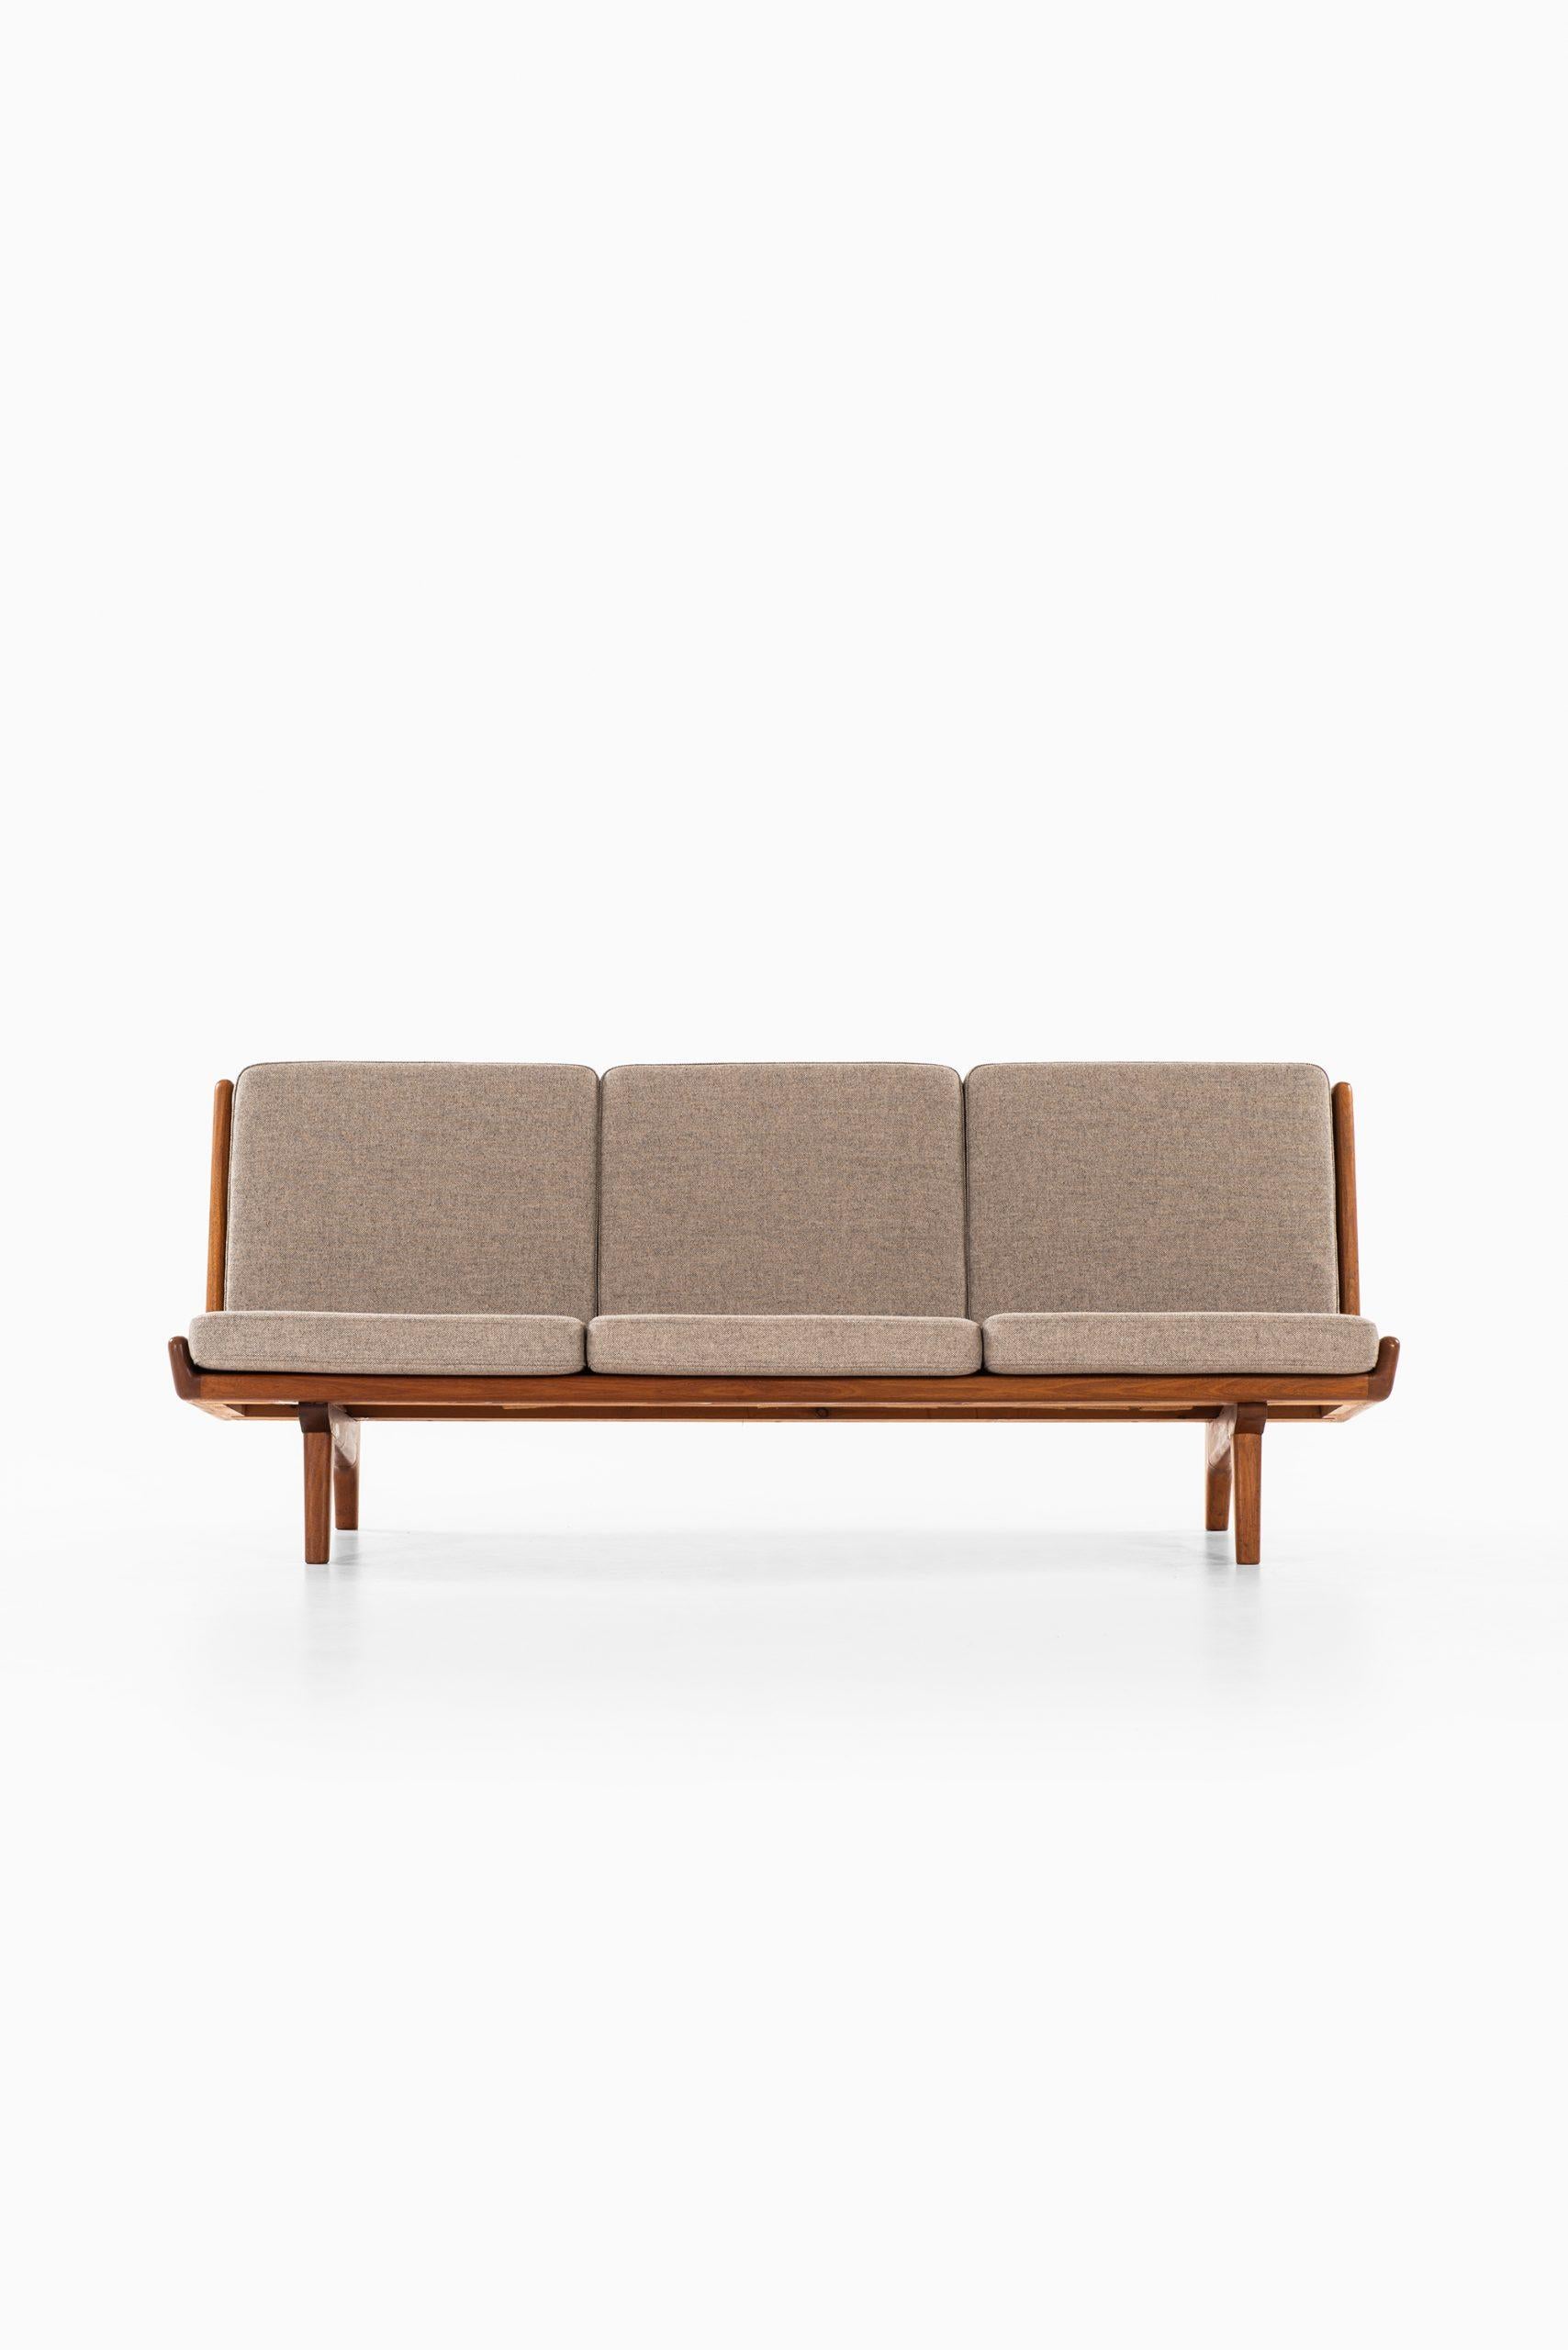 Rare sofa model Trienna designed by Carl Gustaf Hiort af Ornäs. Produced in Finland.